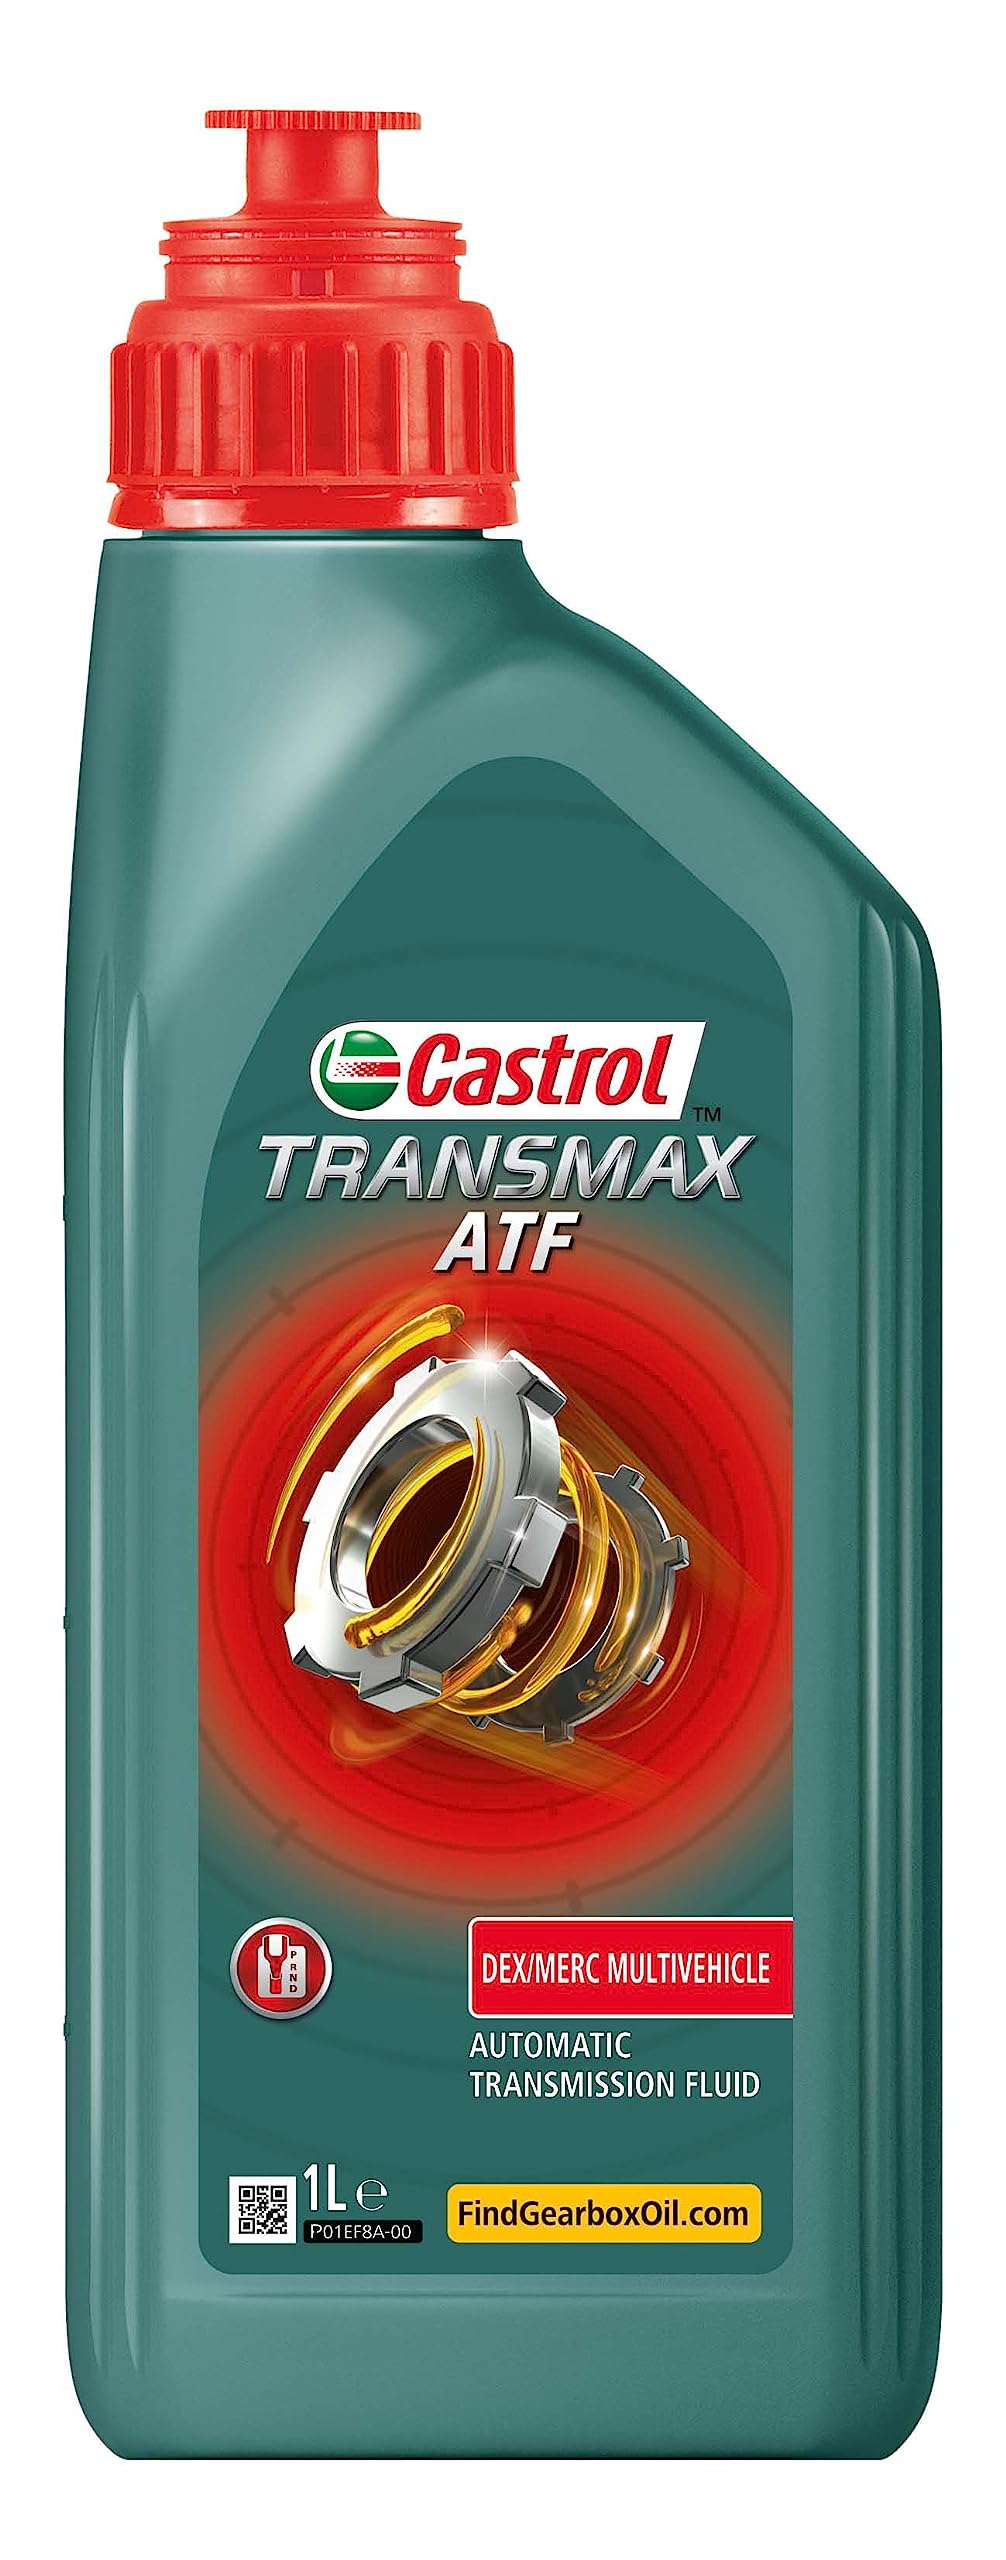 Castrol TRANSMAX ATF Dex/Merc Multivehicle Getriebeöl, 1L von Castrol